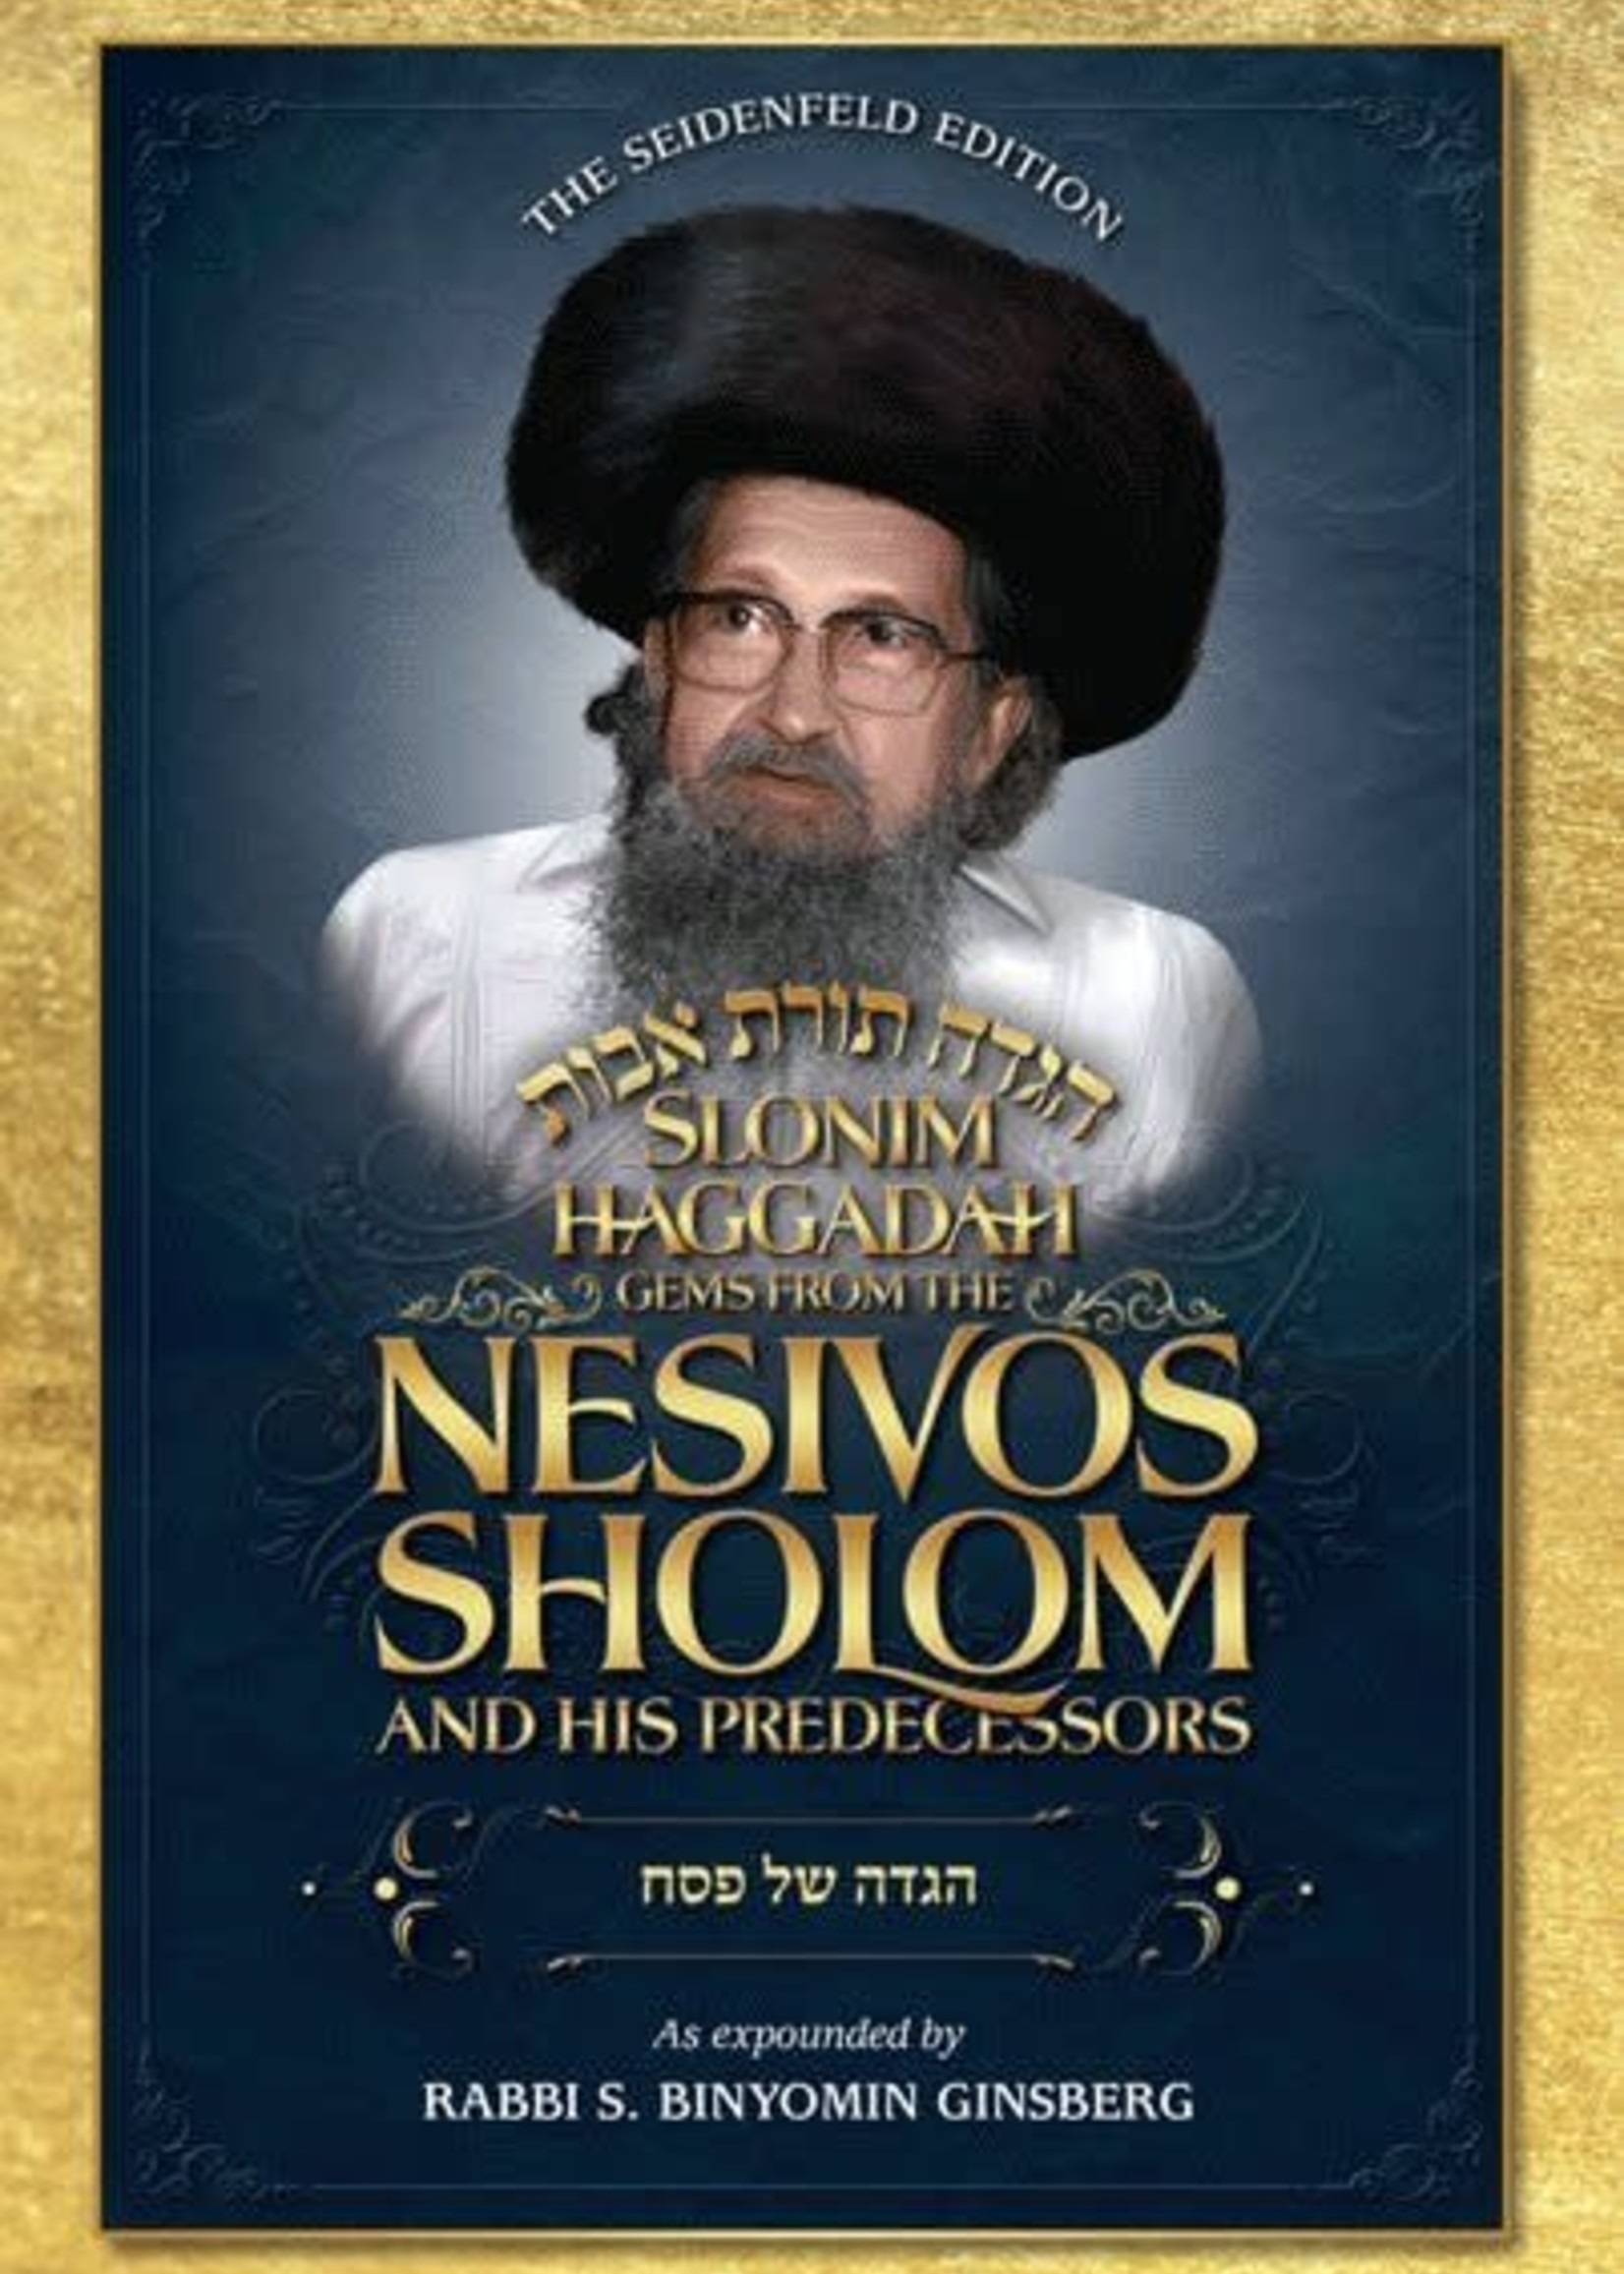 Rabbi S Binyomin Ginsburg Gems from the Nesivos Shalom - Slonim Haggadah